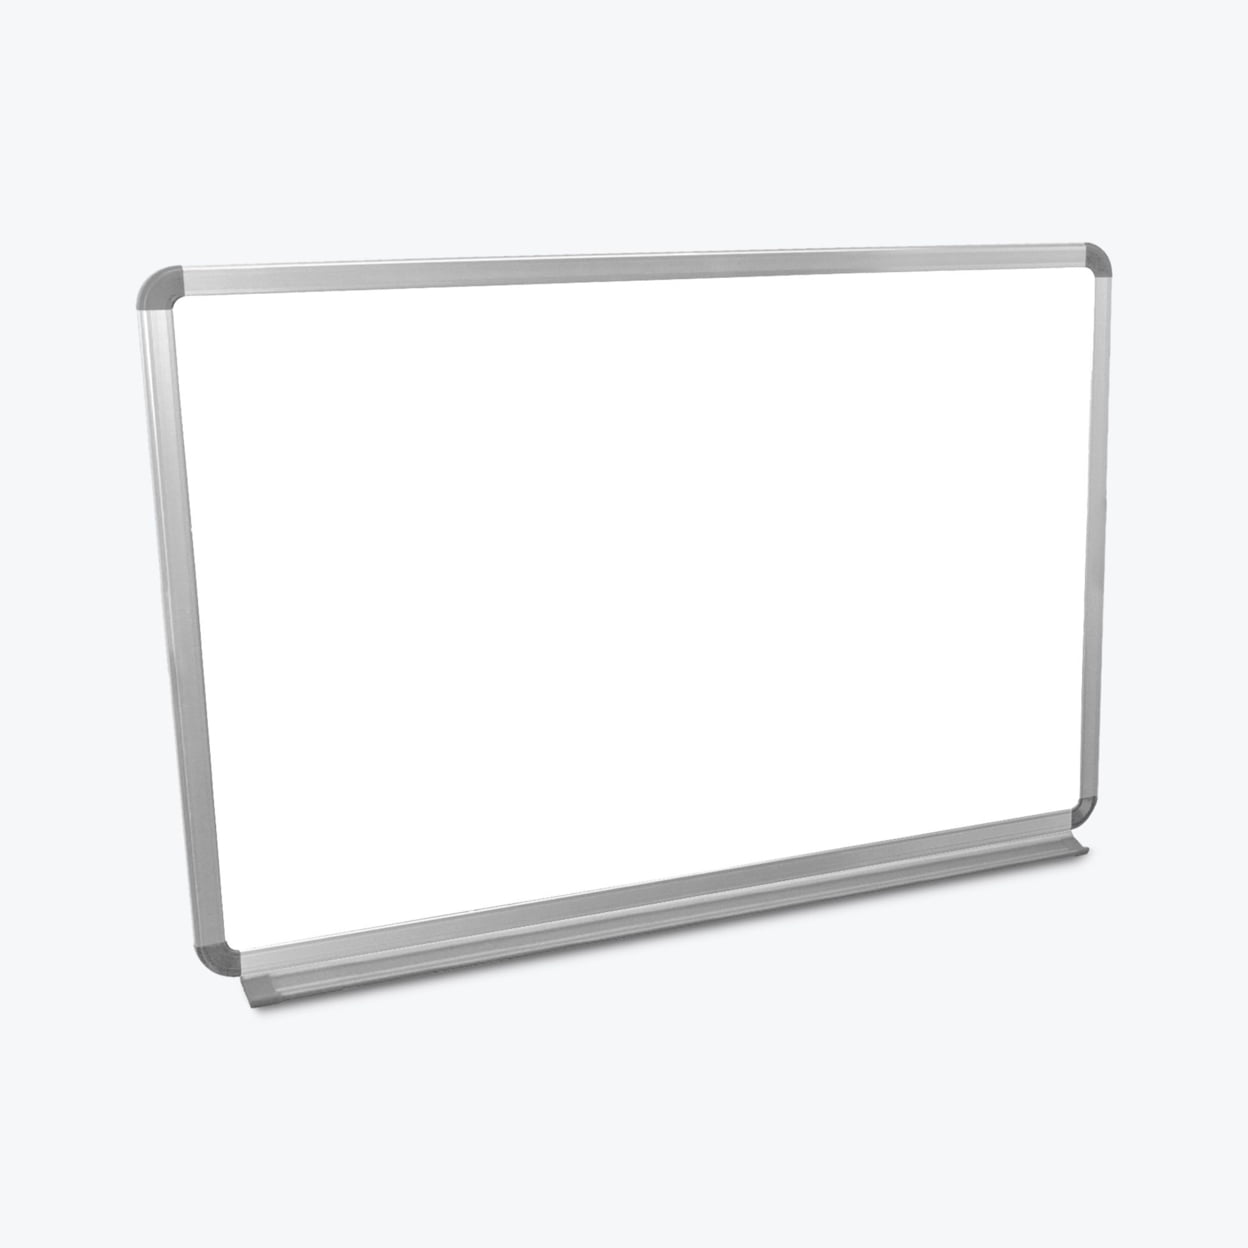 Mahim Wall Mounted Whiteboard, 36 x 48 Inbox Zero